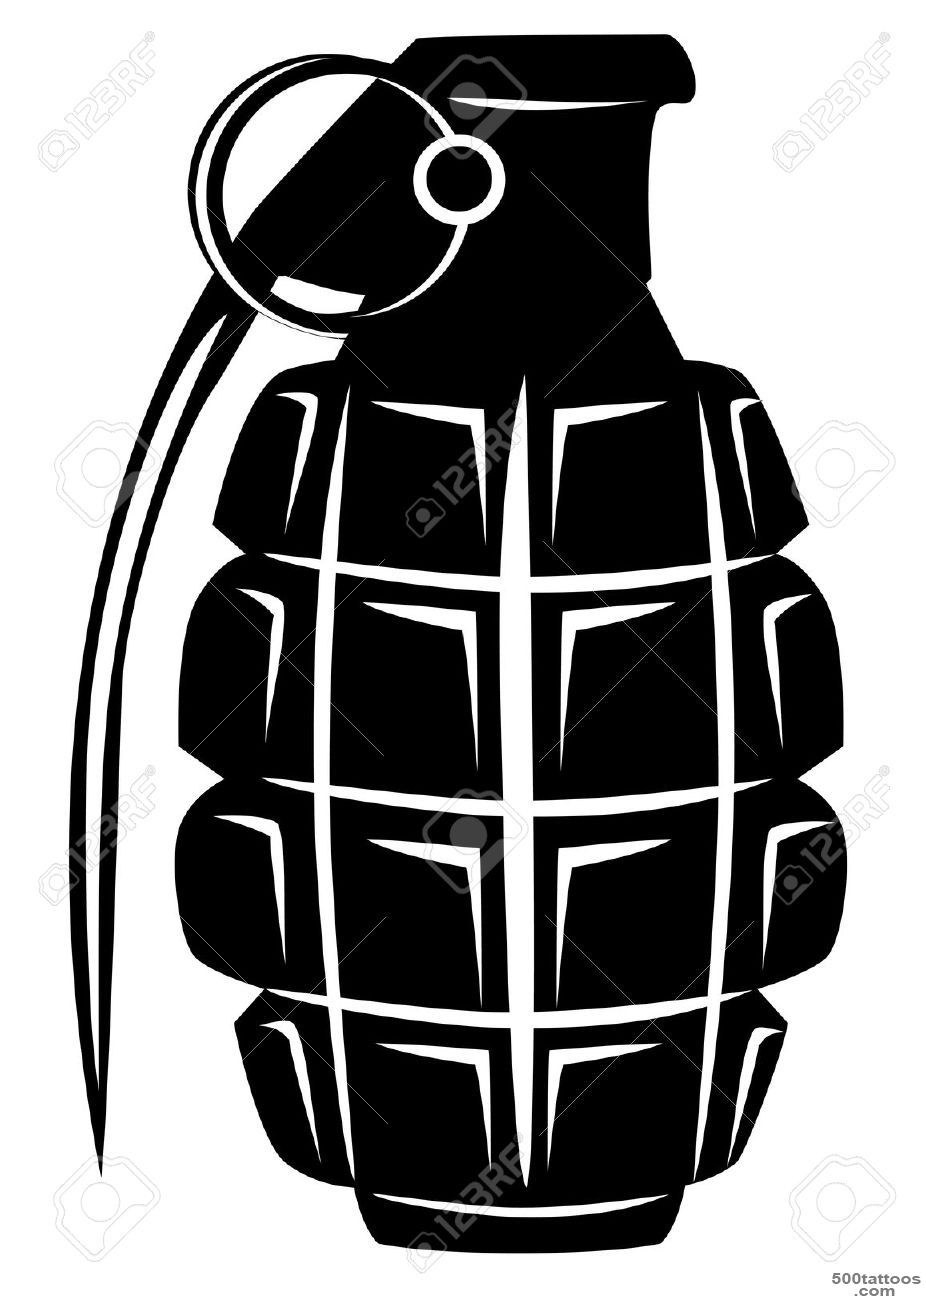 Pin Grenade Stencil Tattoo on Pinterest_36